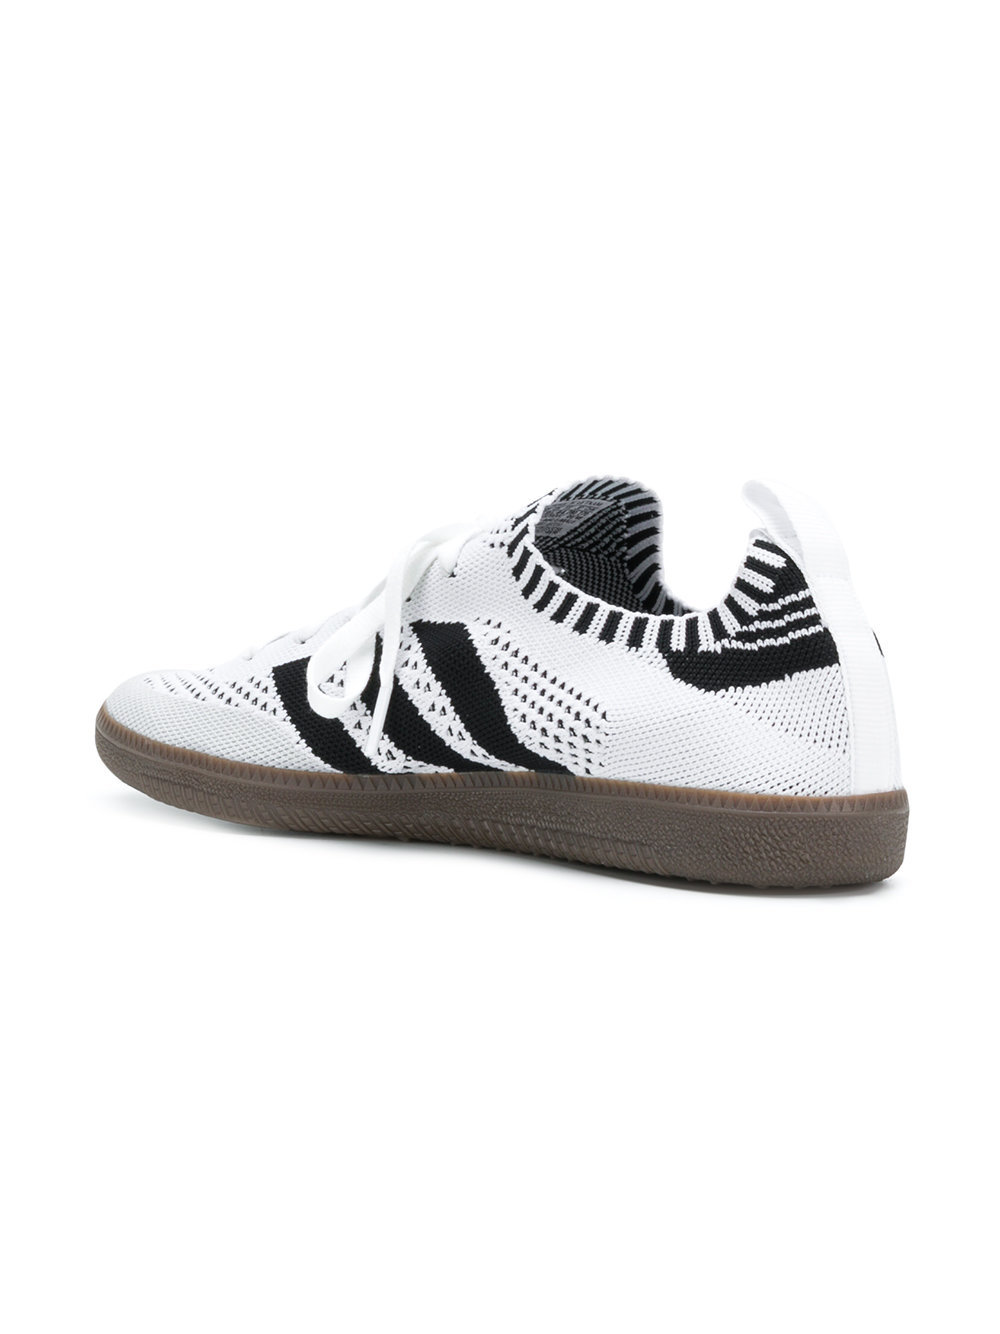 adidas Samba Sock Primeknit Sneakers, $73 | | Lookastic